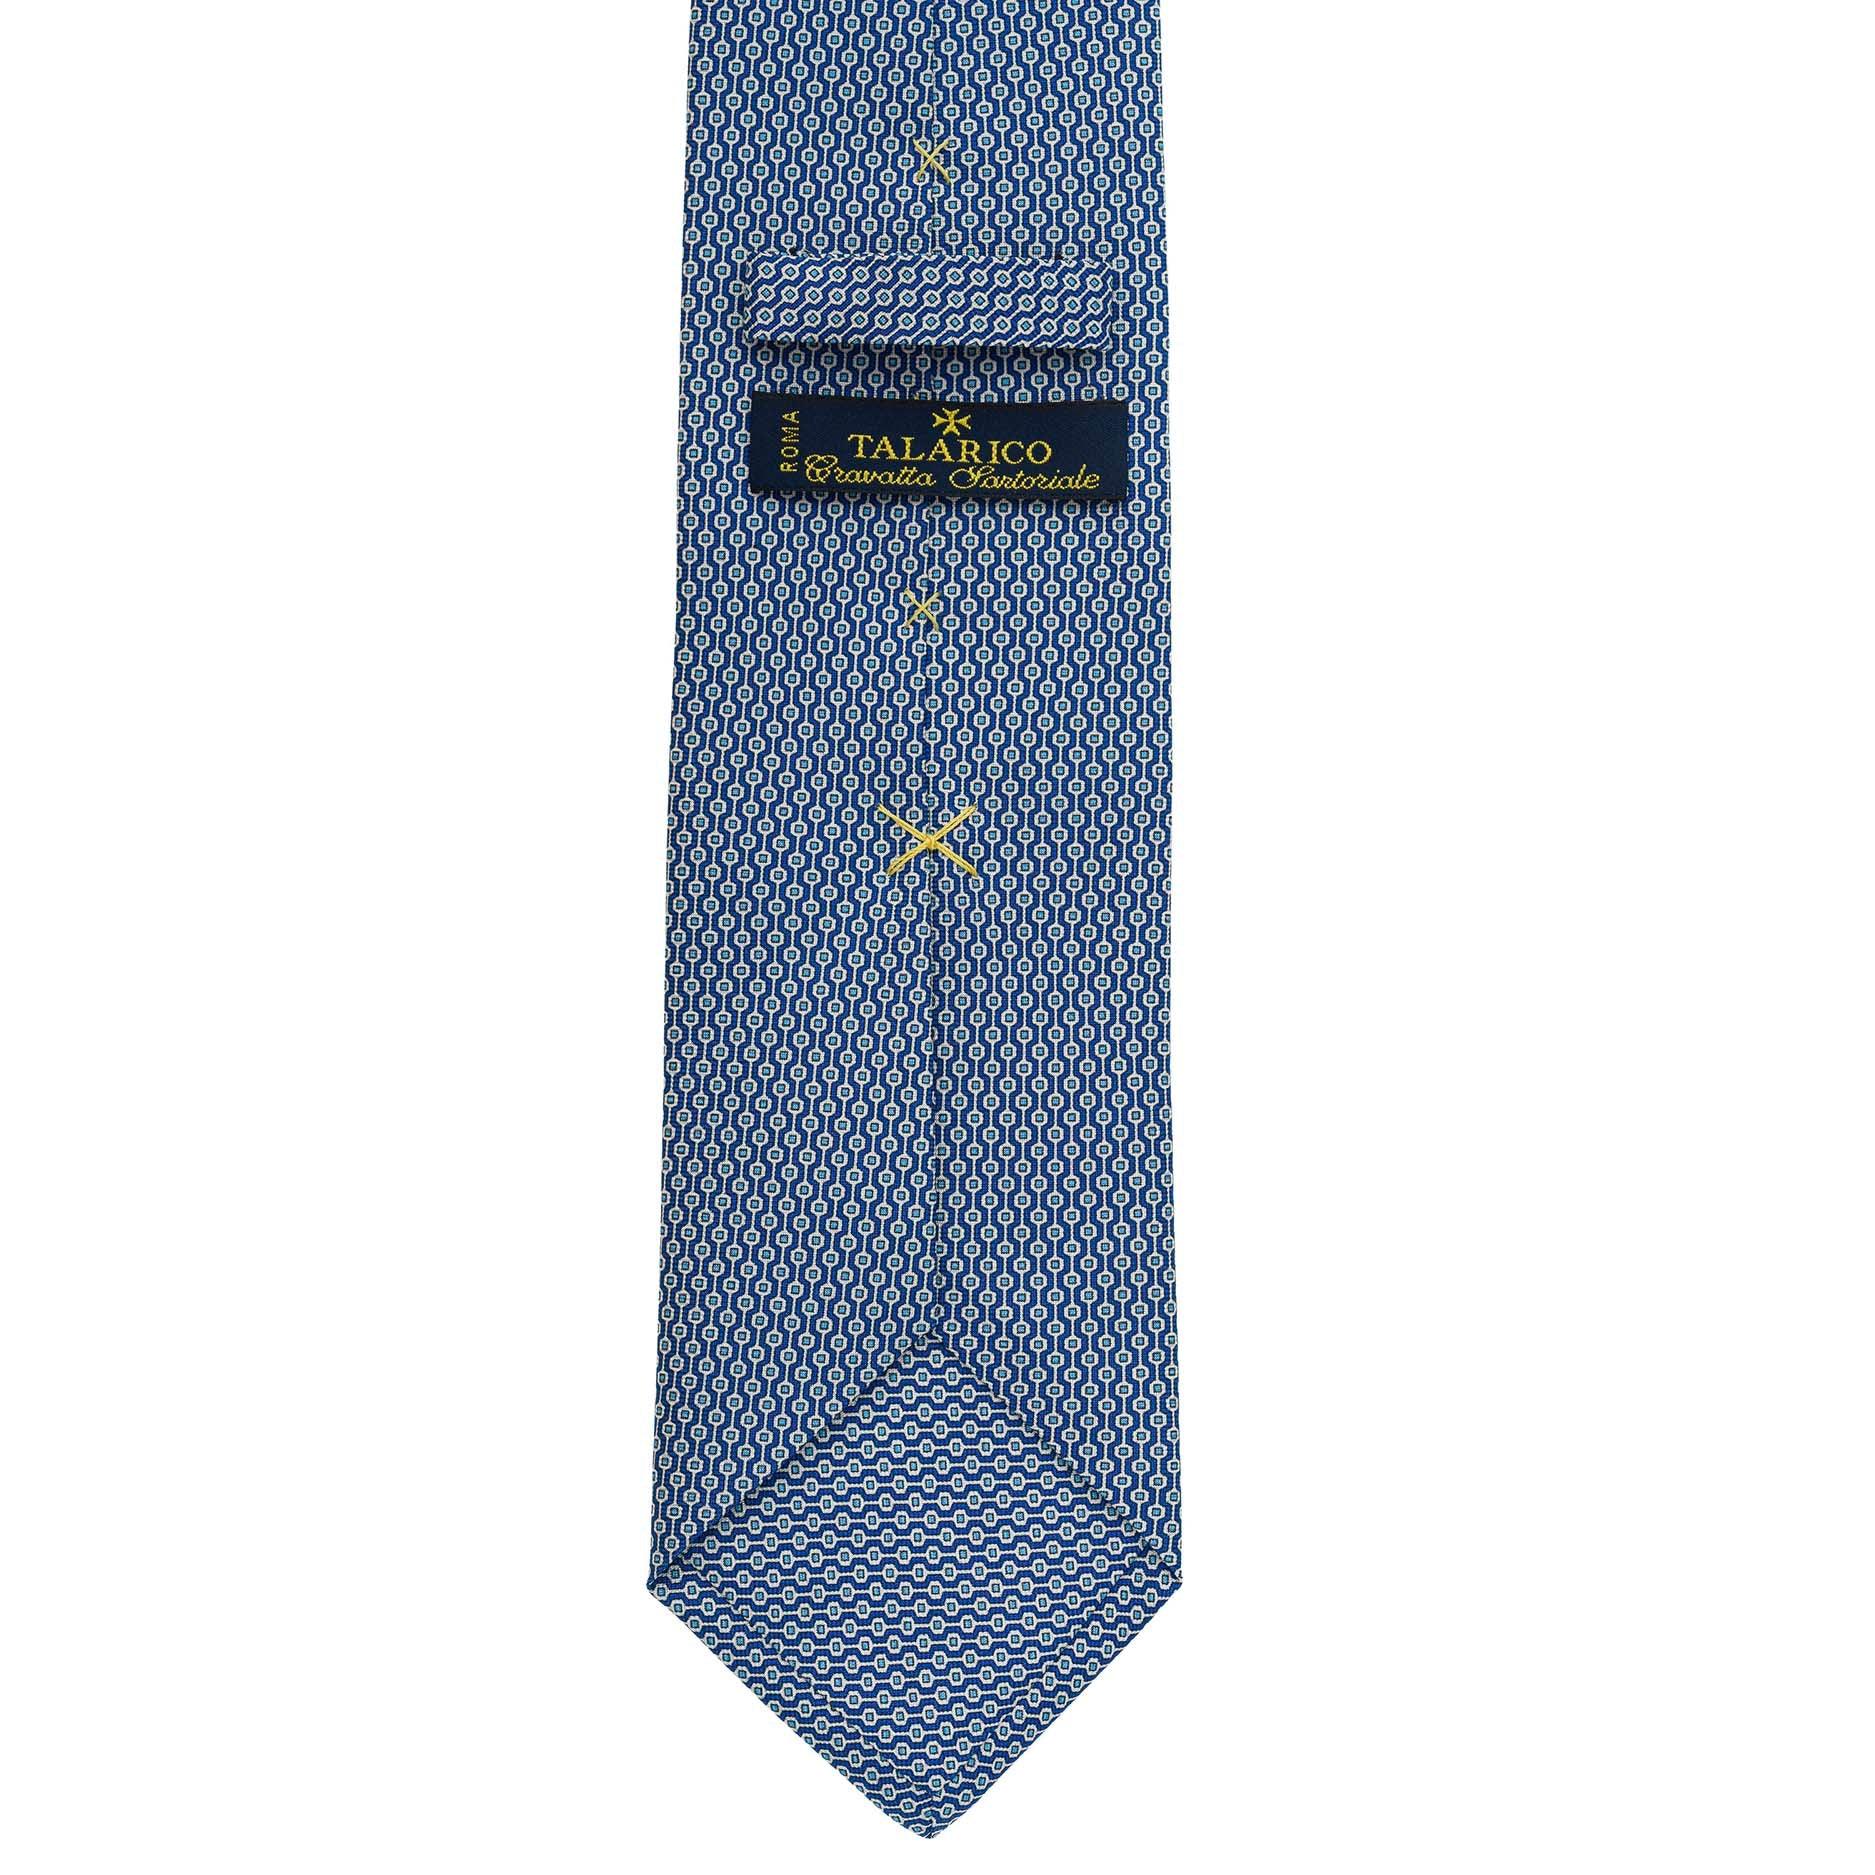 Cravatta 3 pieghe - TAL V2 - Talarico Cravatte